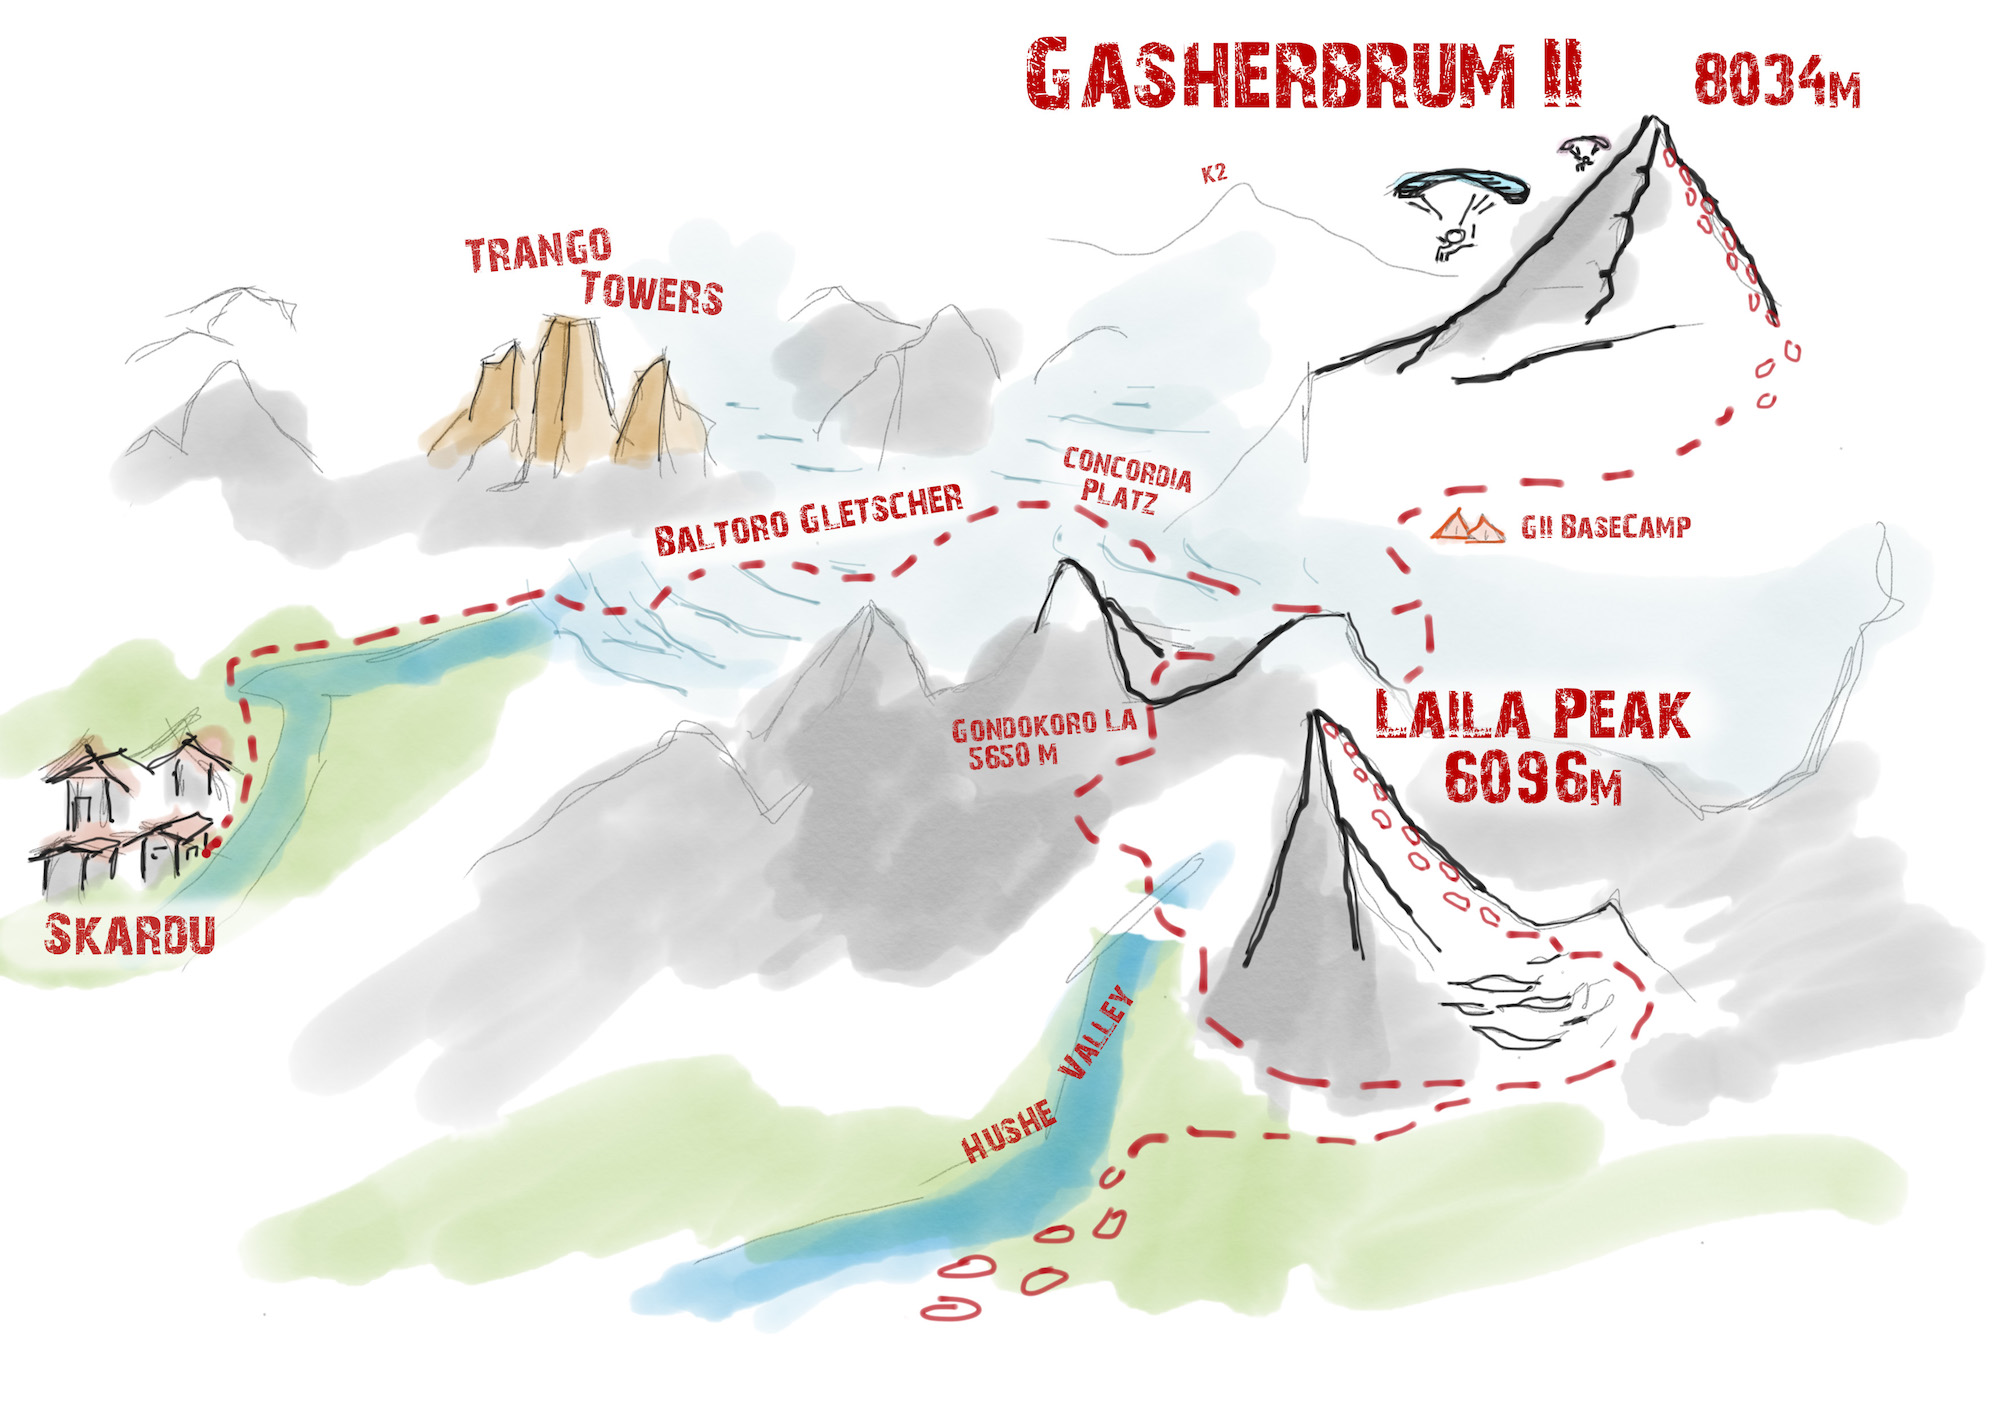 Expedition Gasherbrum II & Laila Peak